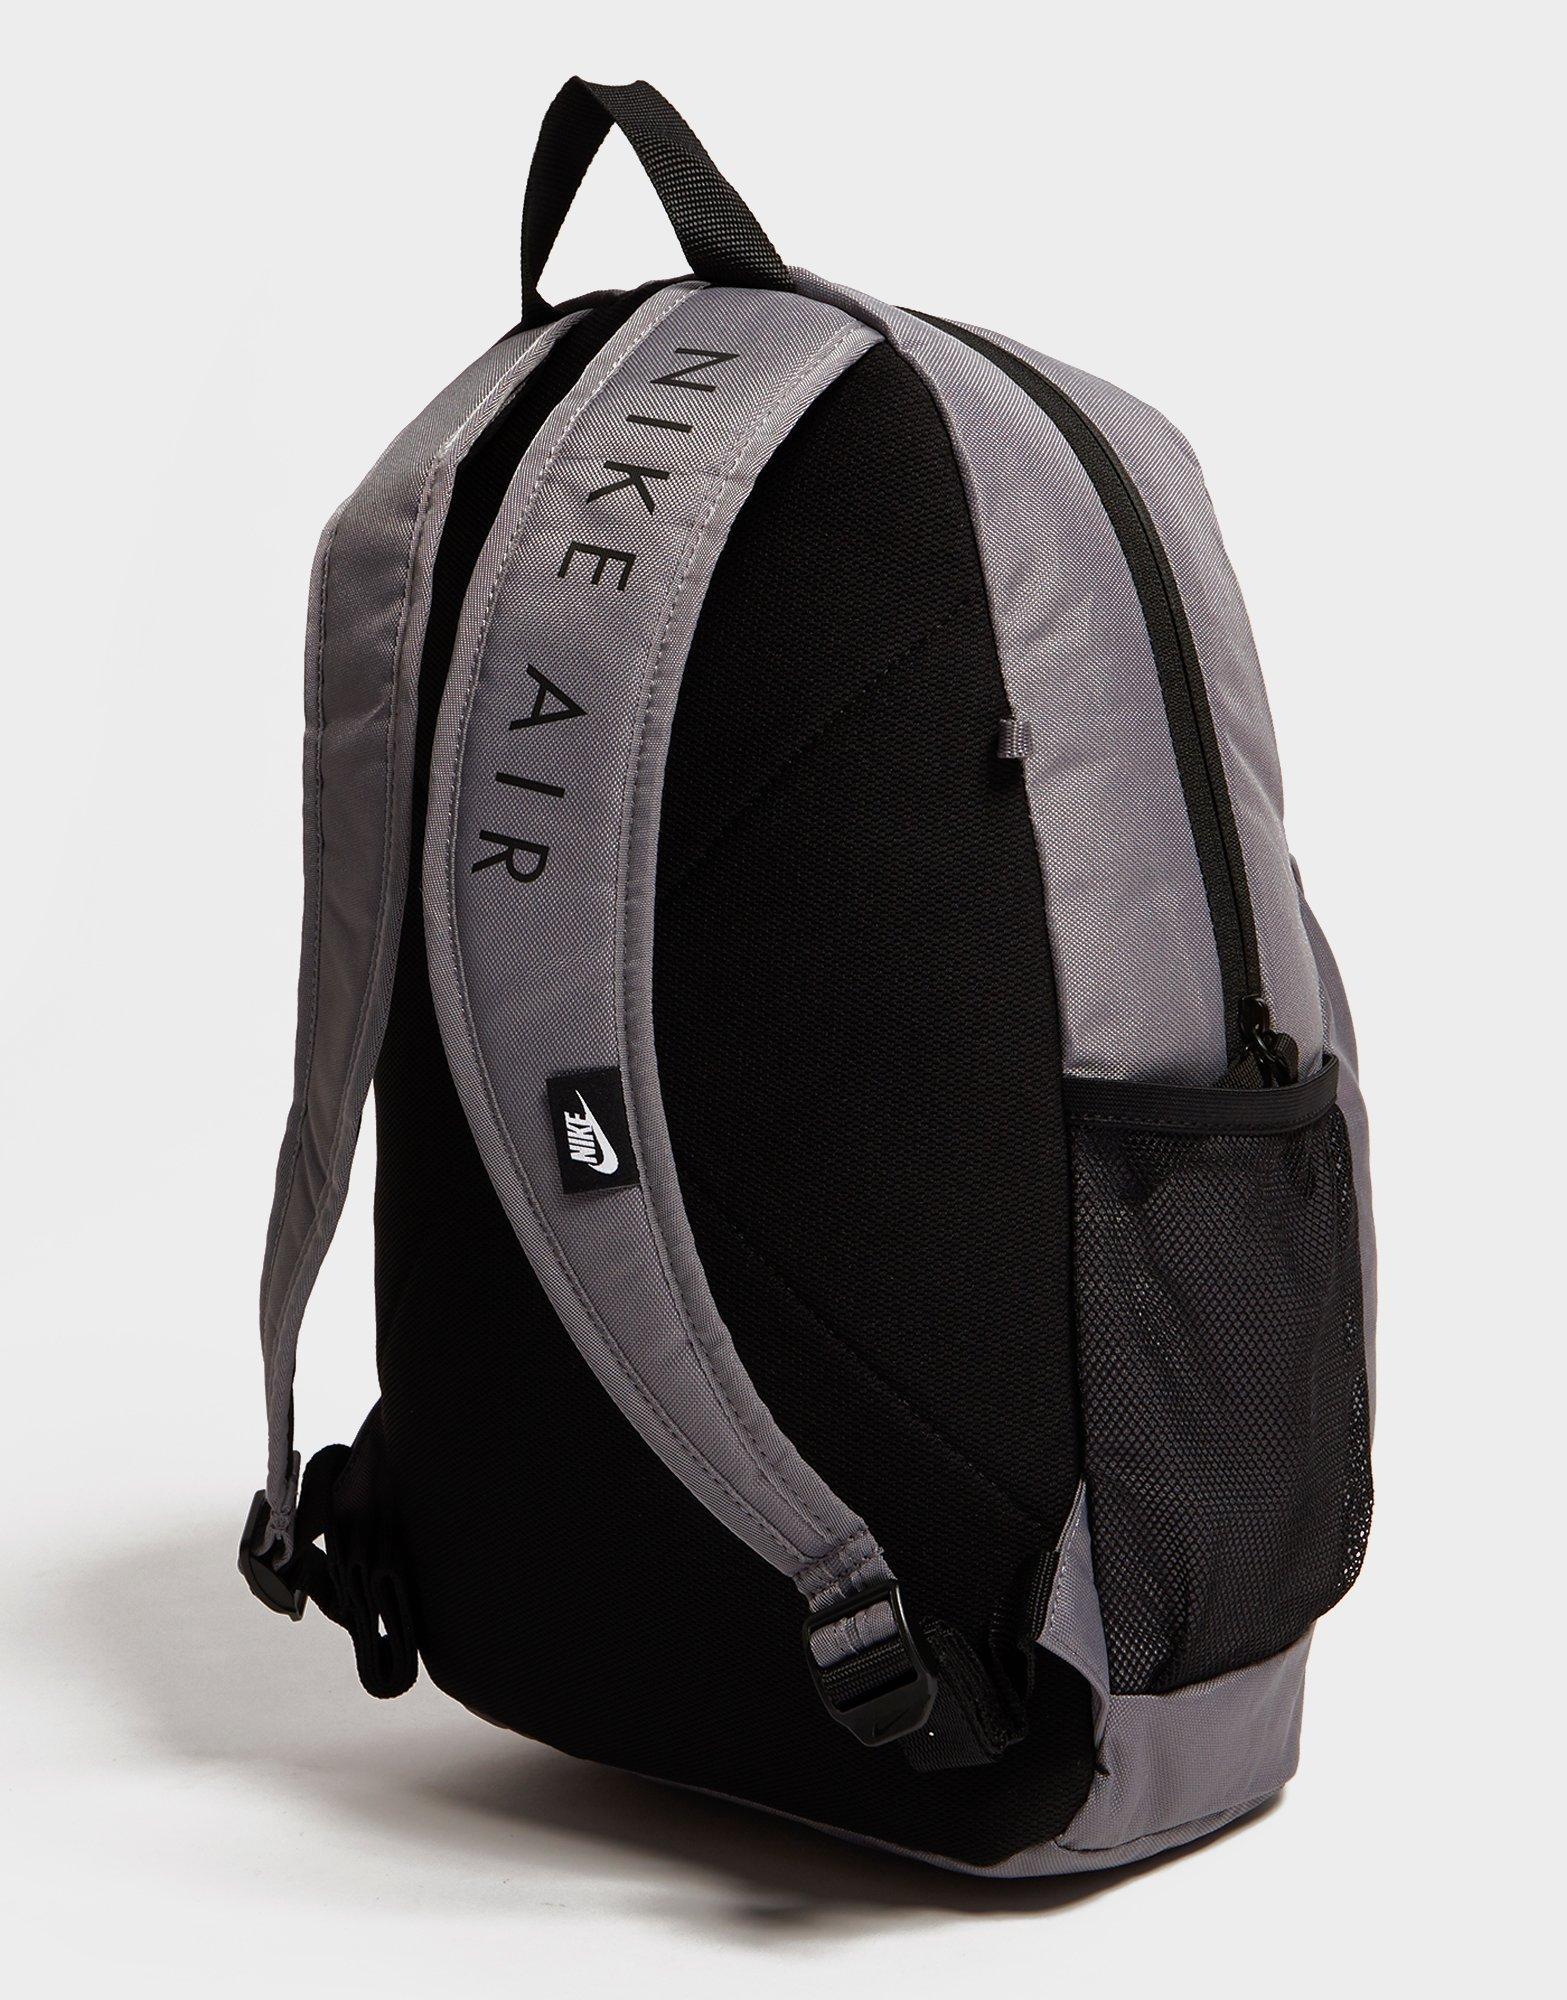 Nike Synthetic Elemental Backpack in Grey/Black (Black) for Men - Lyst